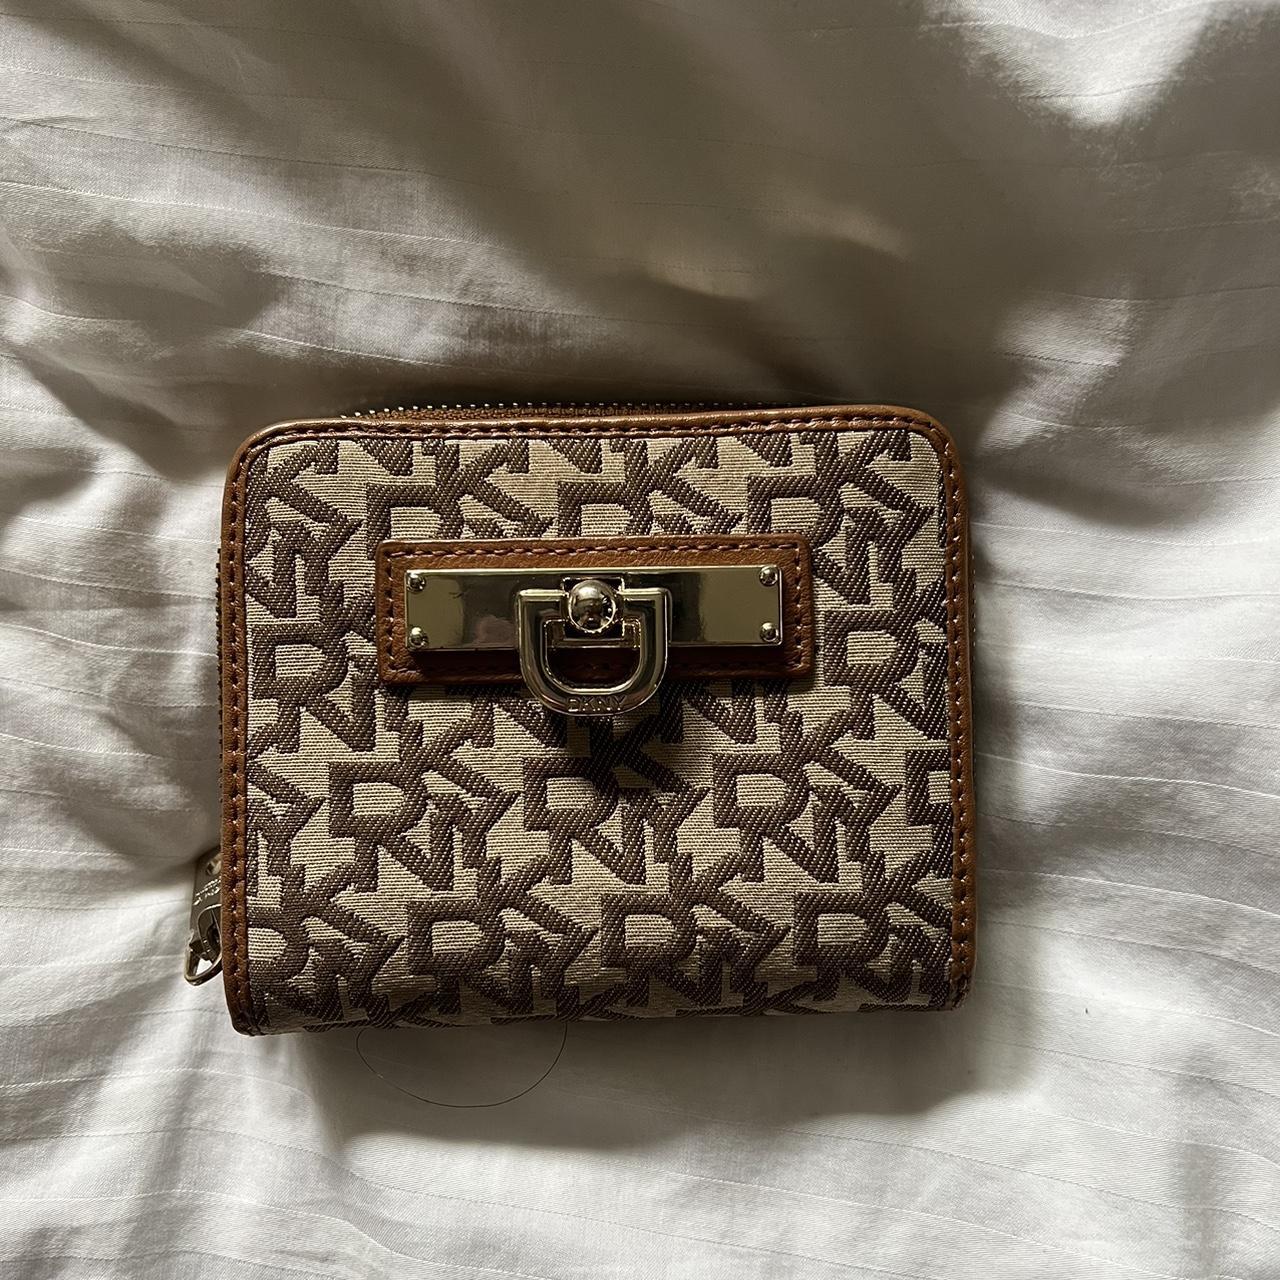 DKNY Handbags & Wallets | MIRO SHOES Dundalk Ireland